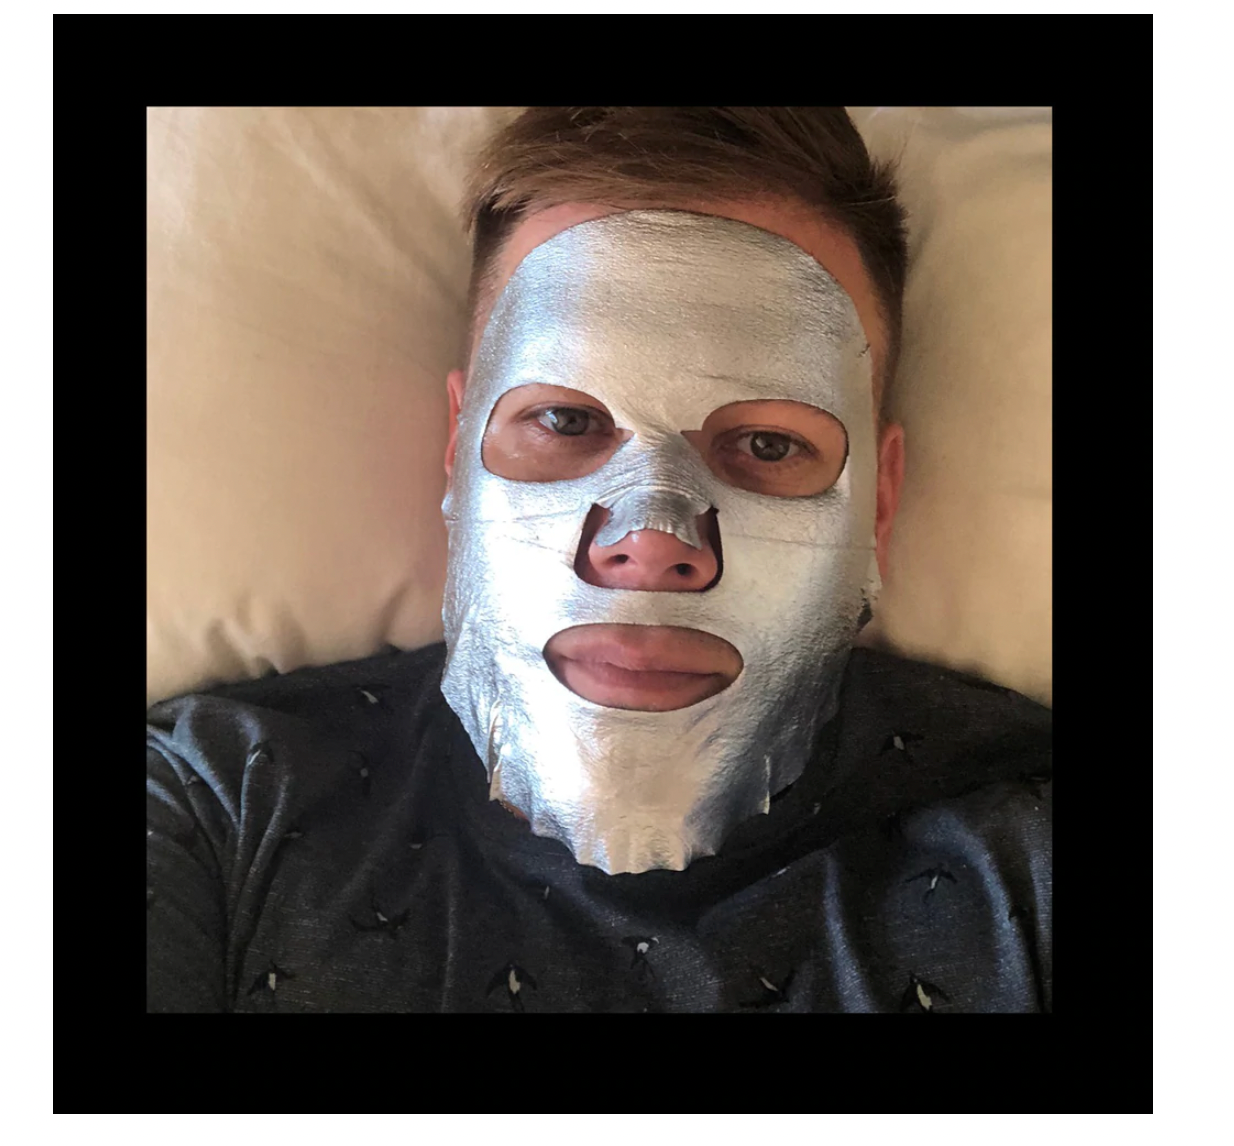 BarberPro Skin Renewing Foil Mask with Hyaluronic Acid & Q10